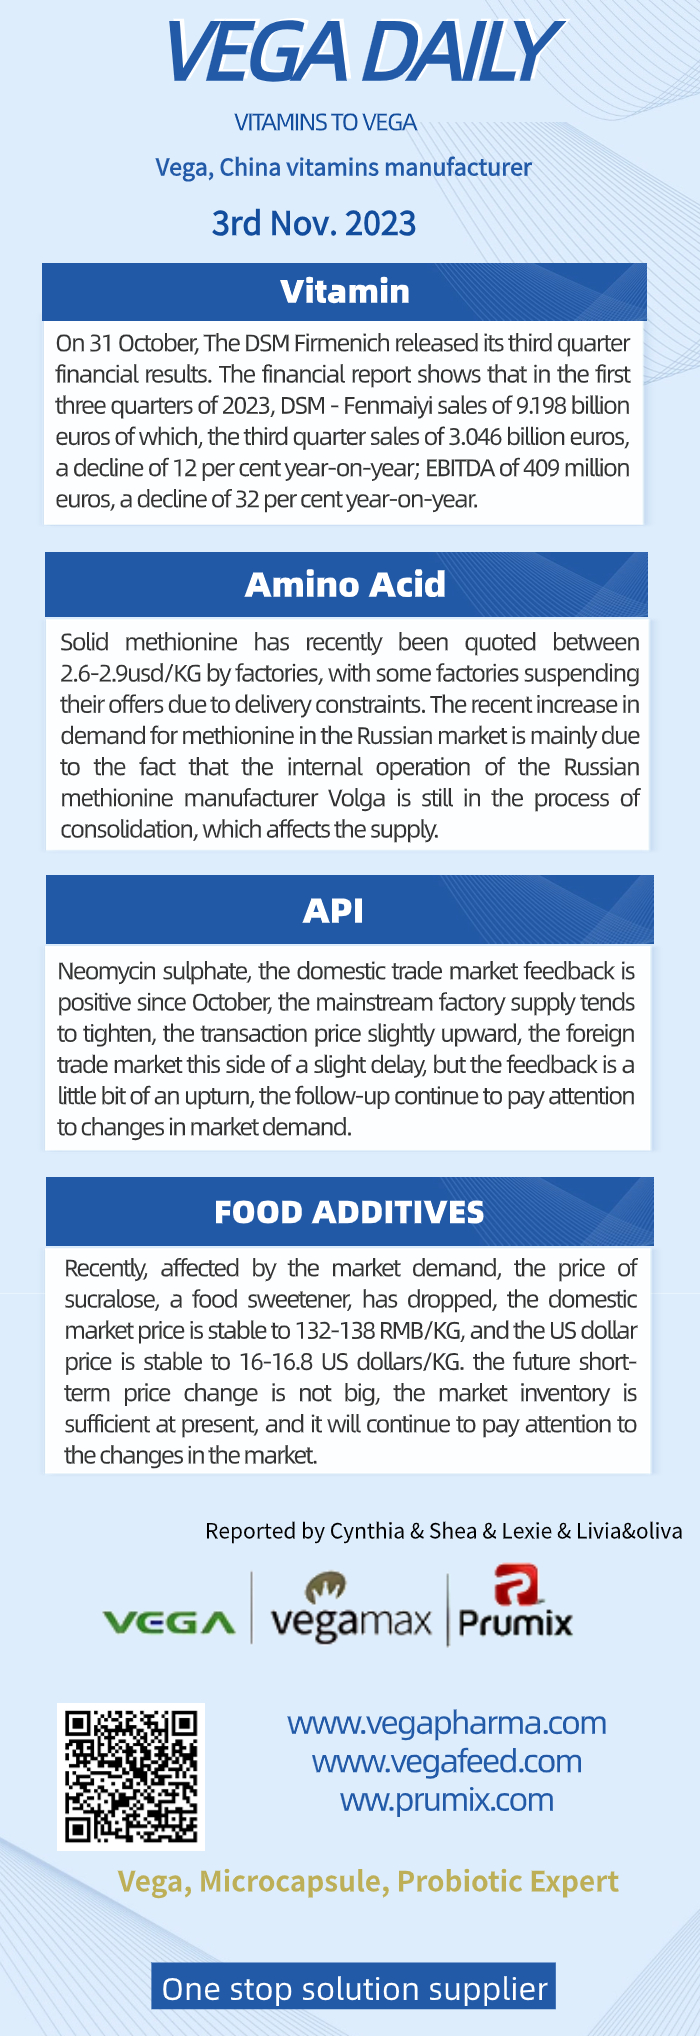 Vega Daily Dated on Nov 3rd 2023 Vitamin  Amino Acid API Food Additives.jpg